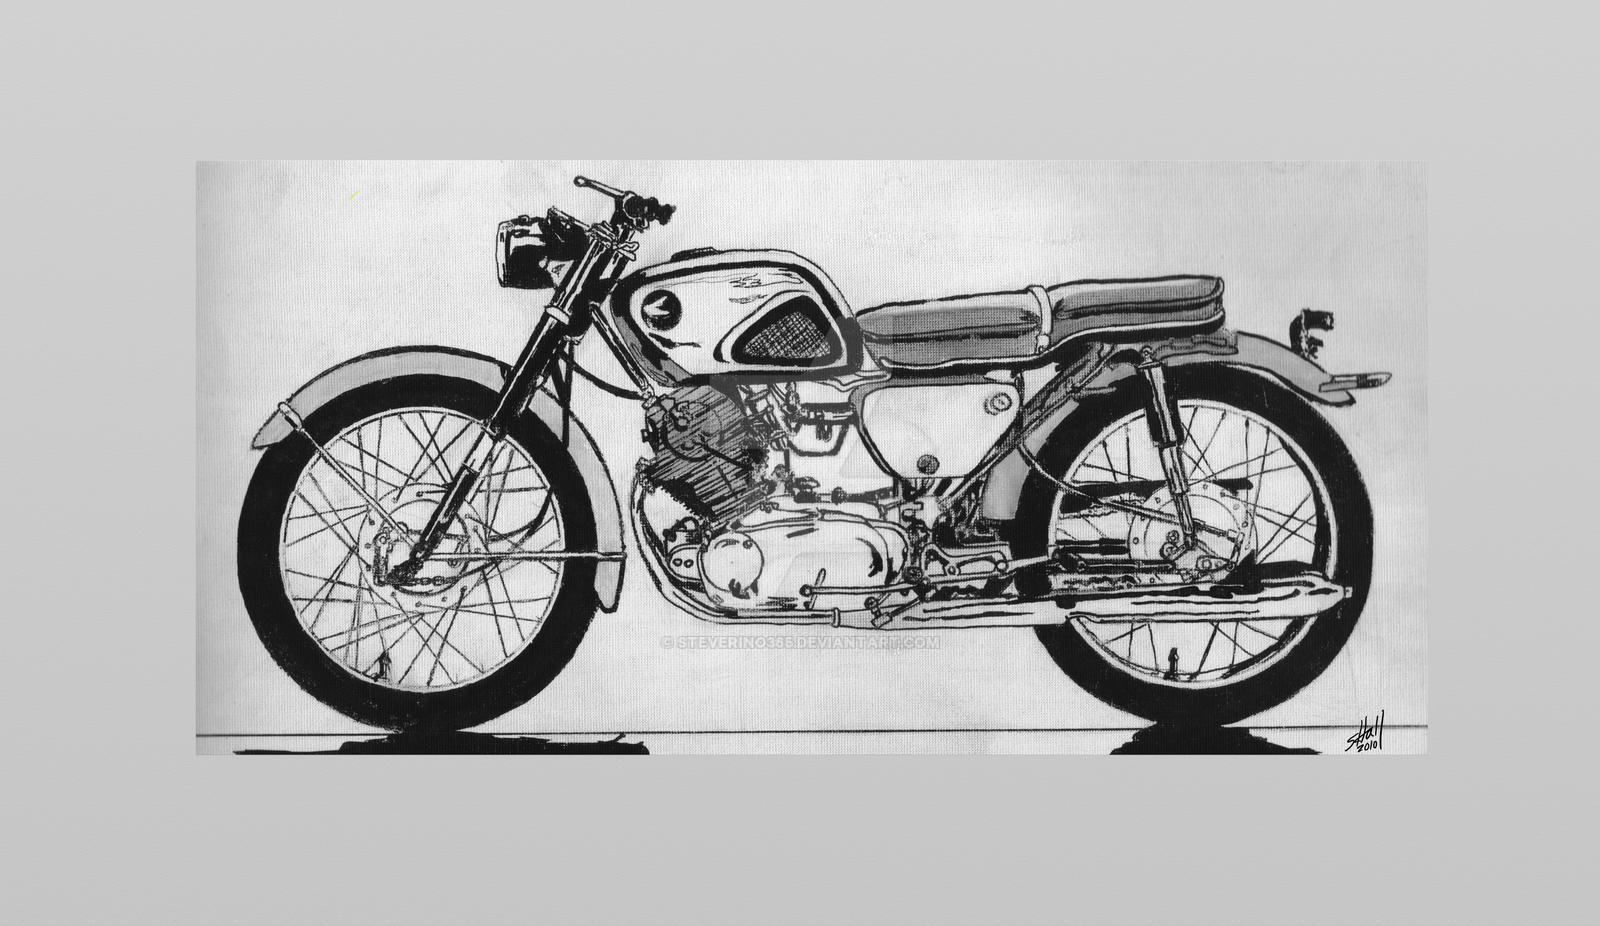 1960's Honda 450cc Motorcycle